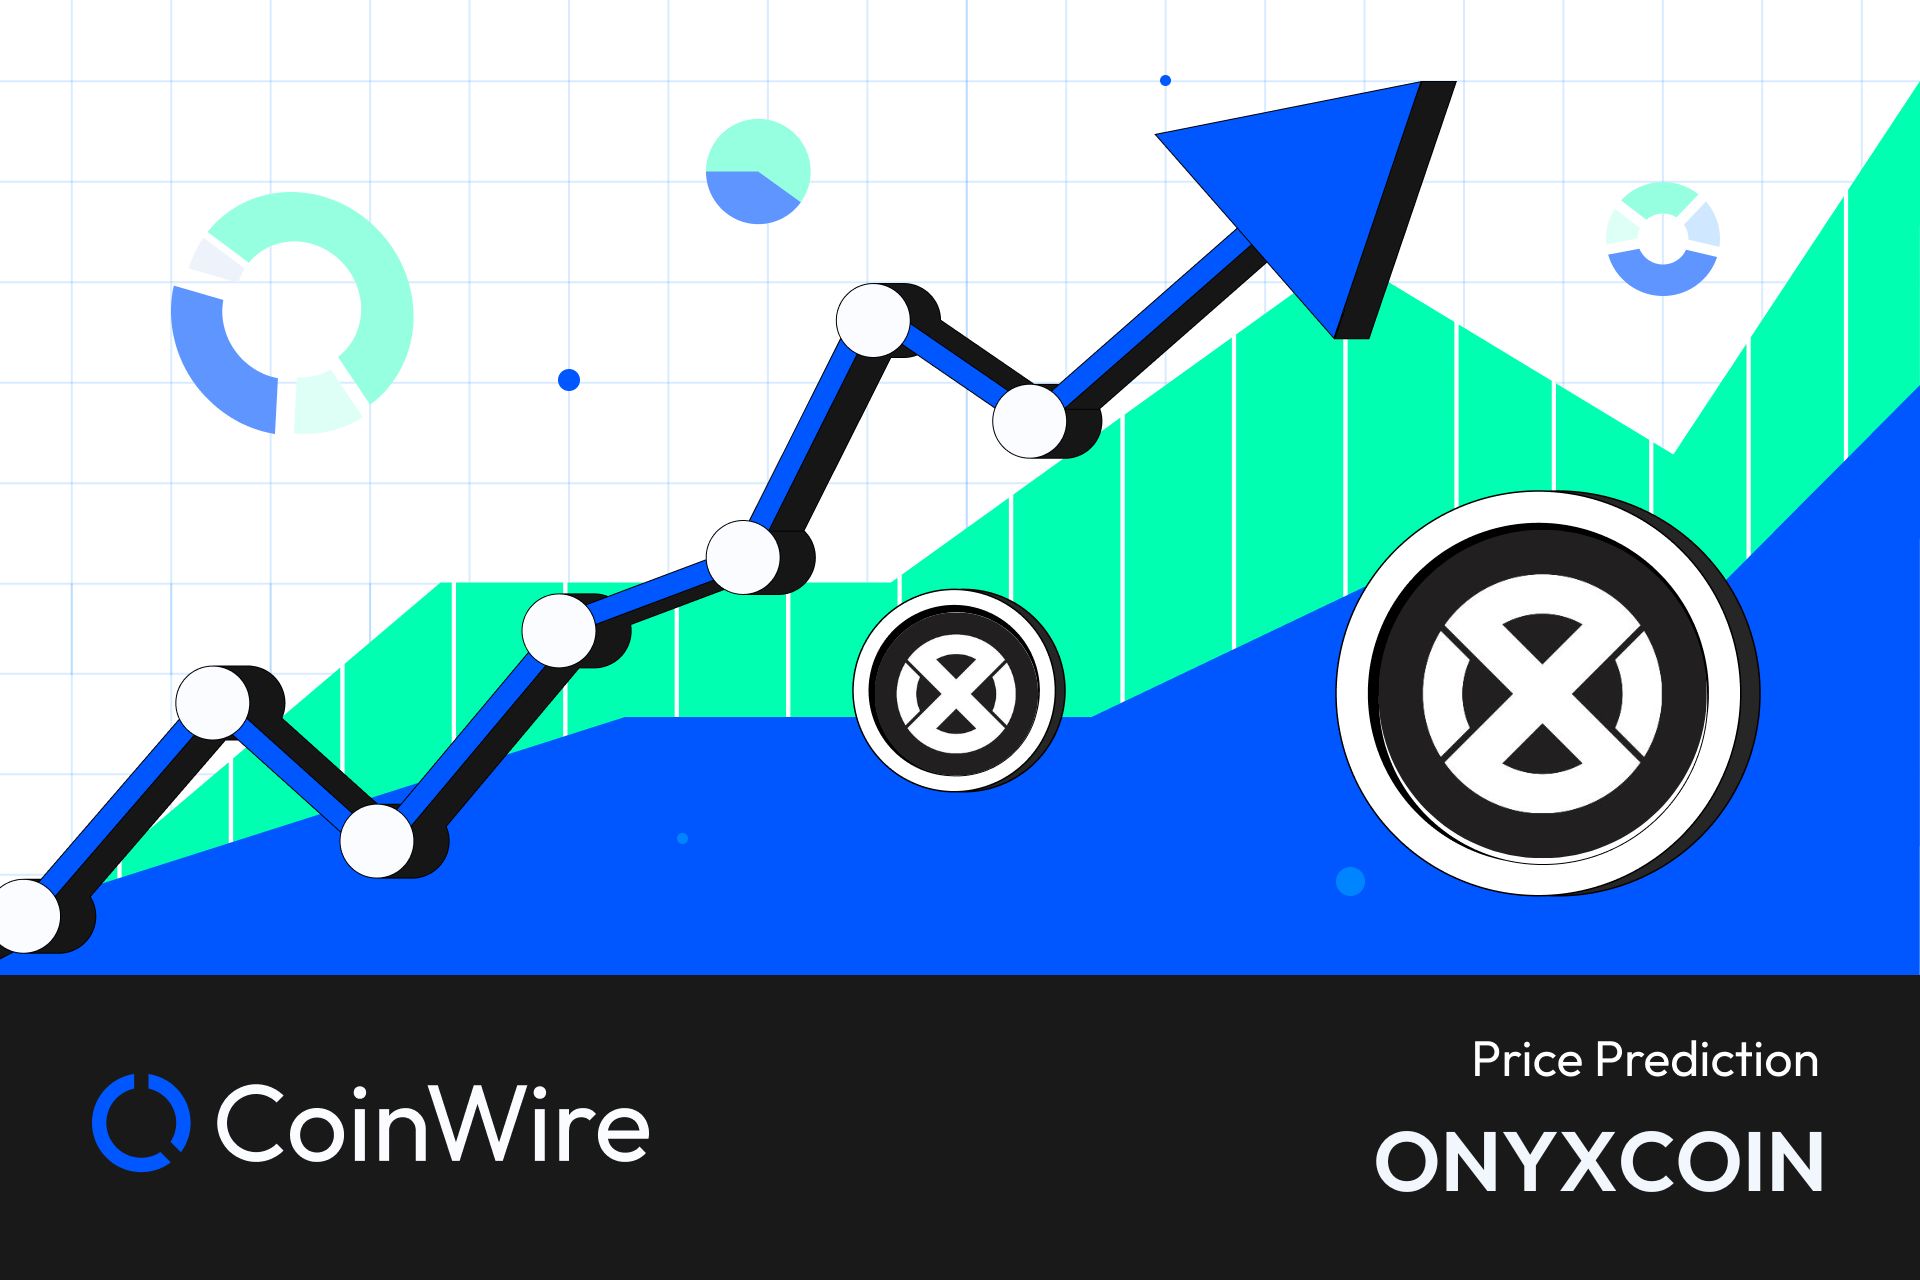 Onyxcoin Price Prediction